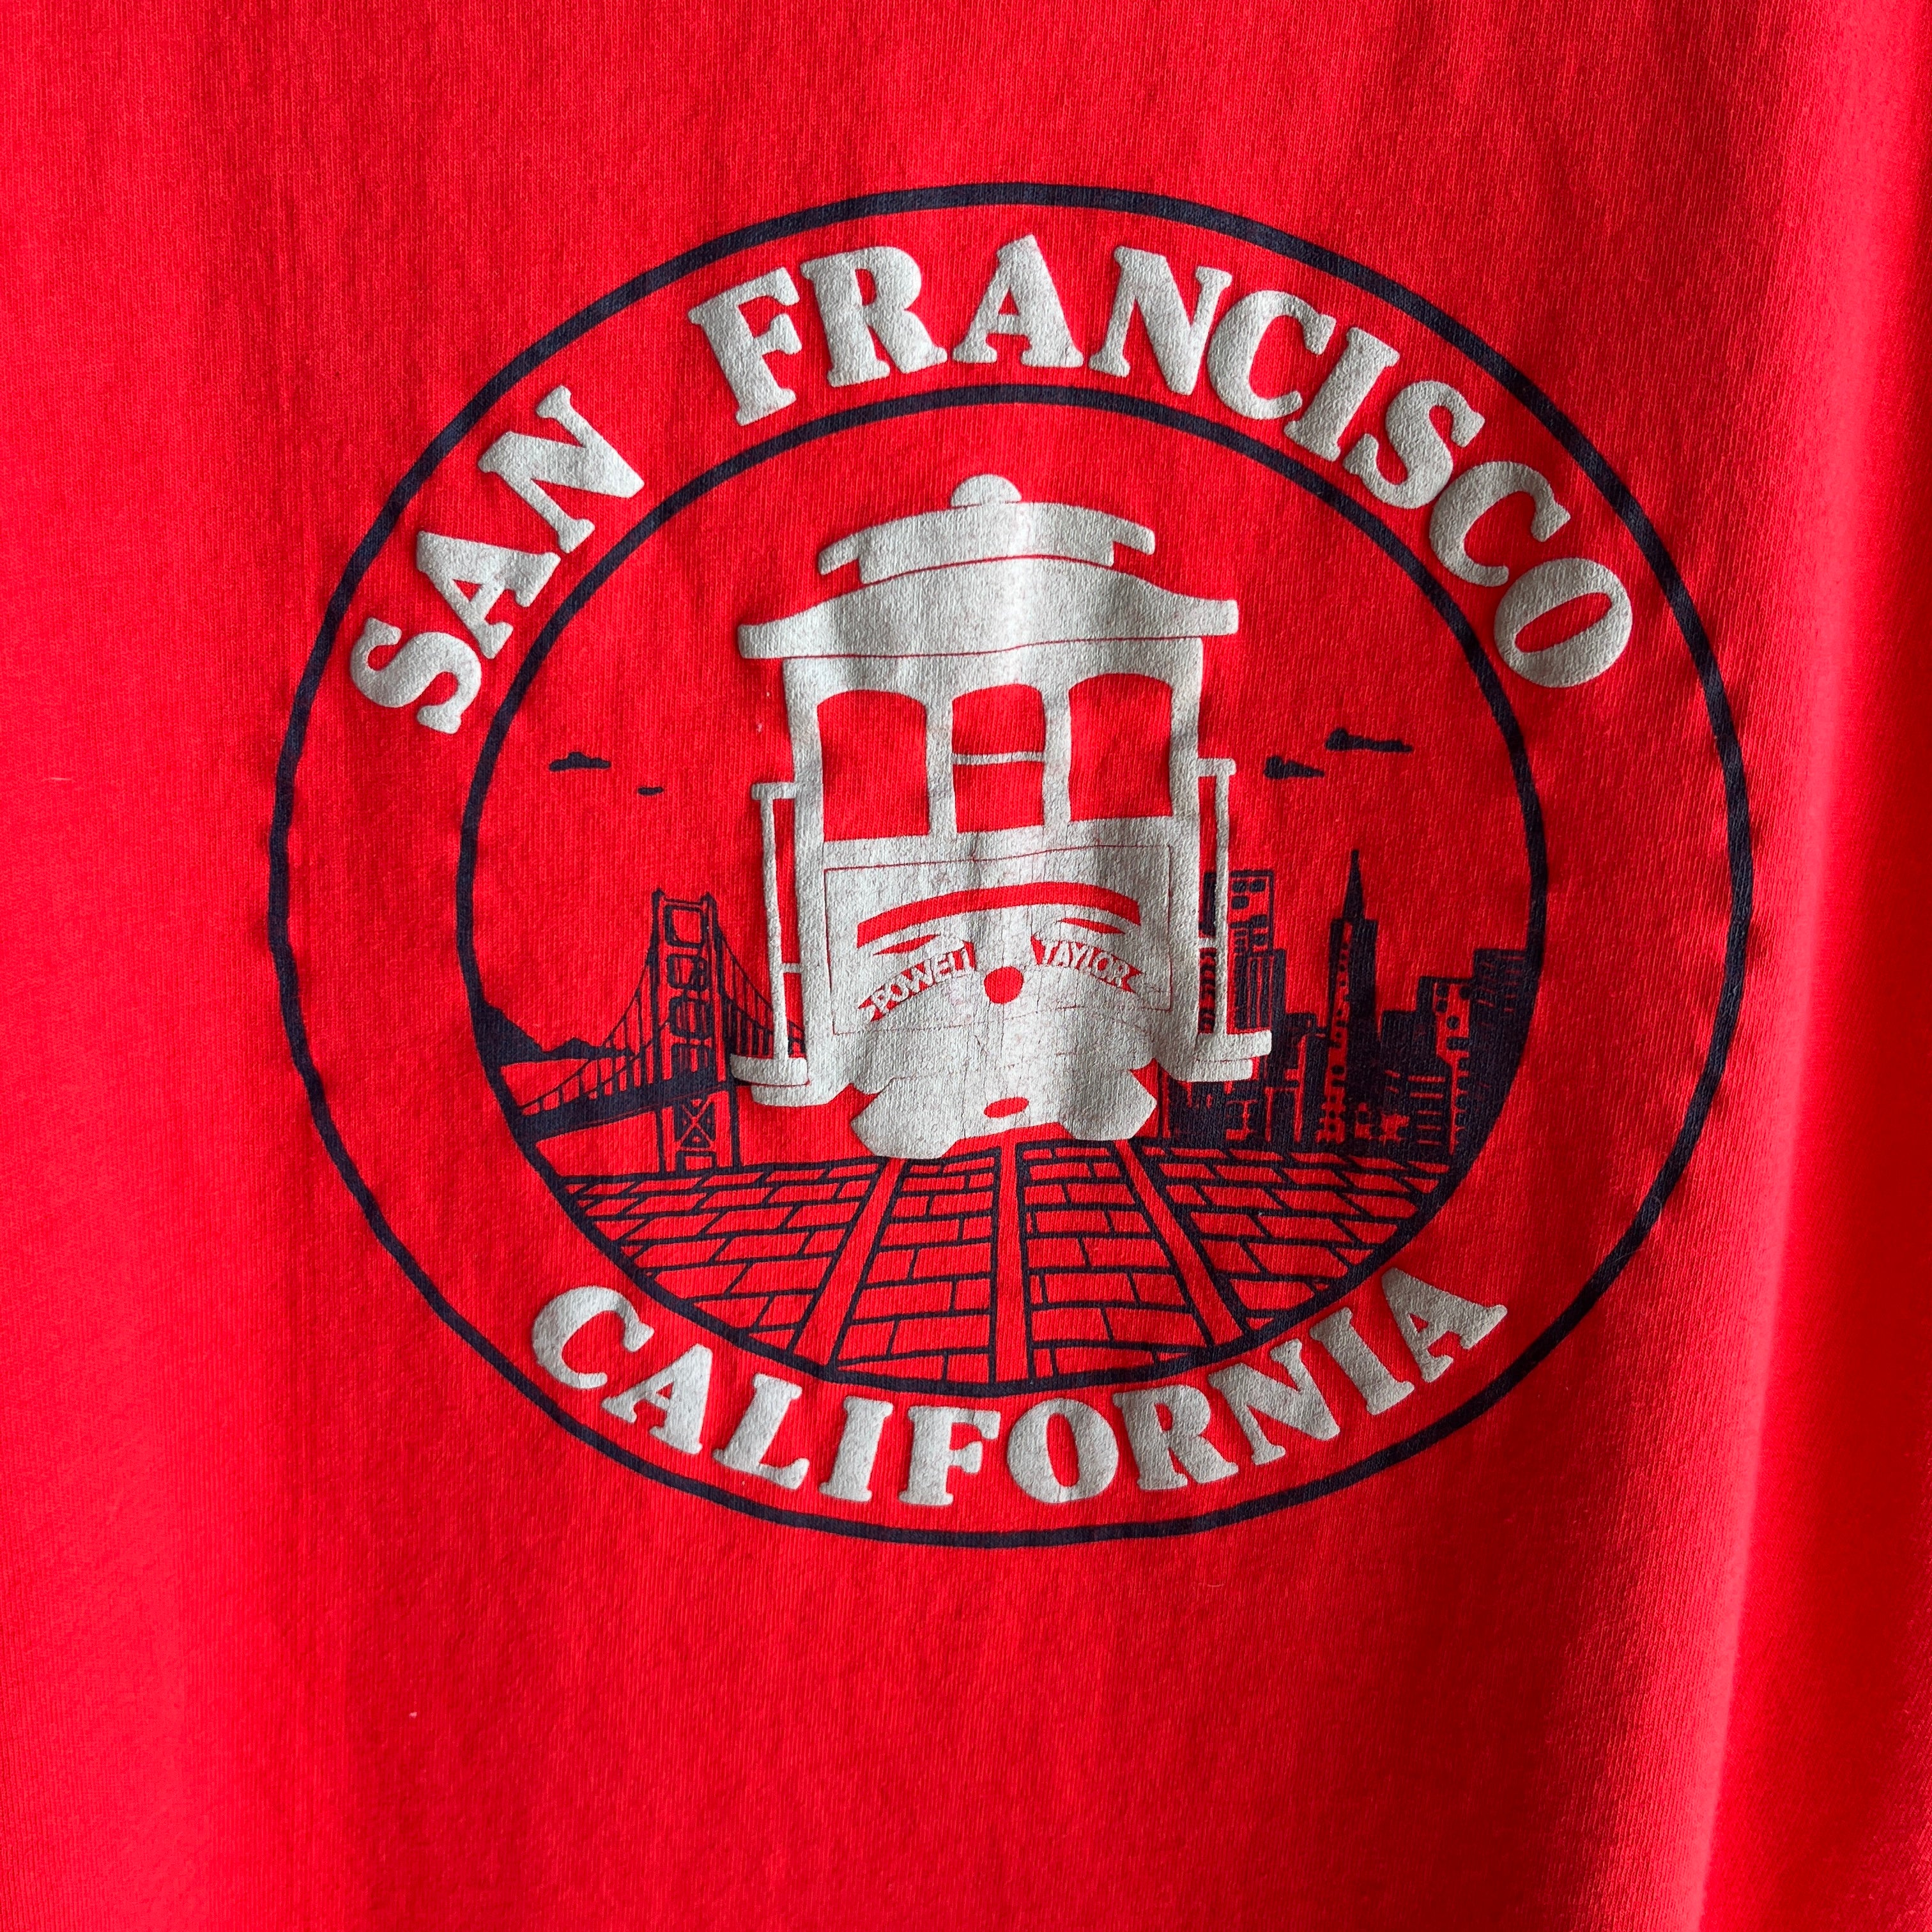 1990s San Francisco Tourist T-Shirt